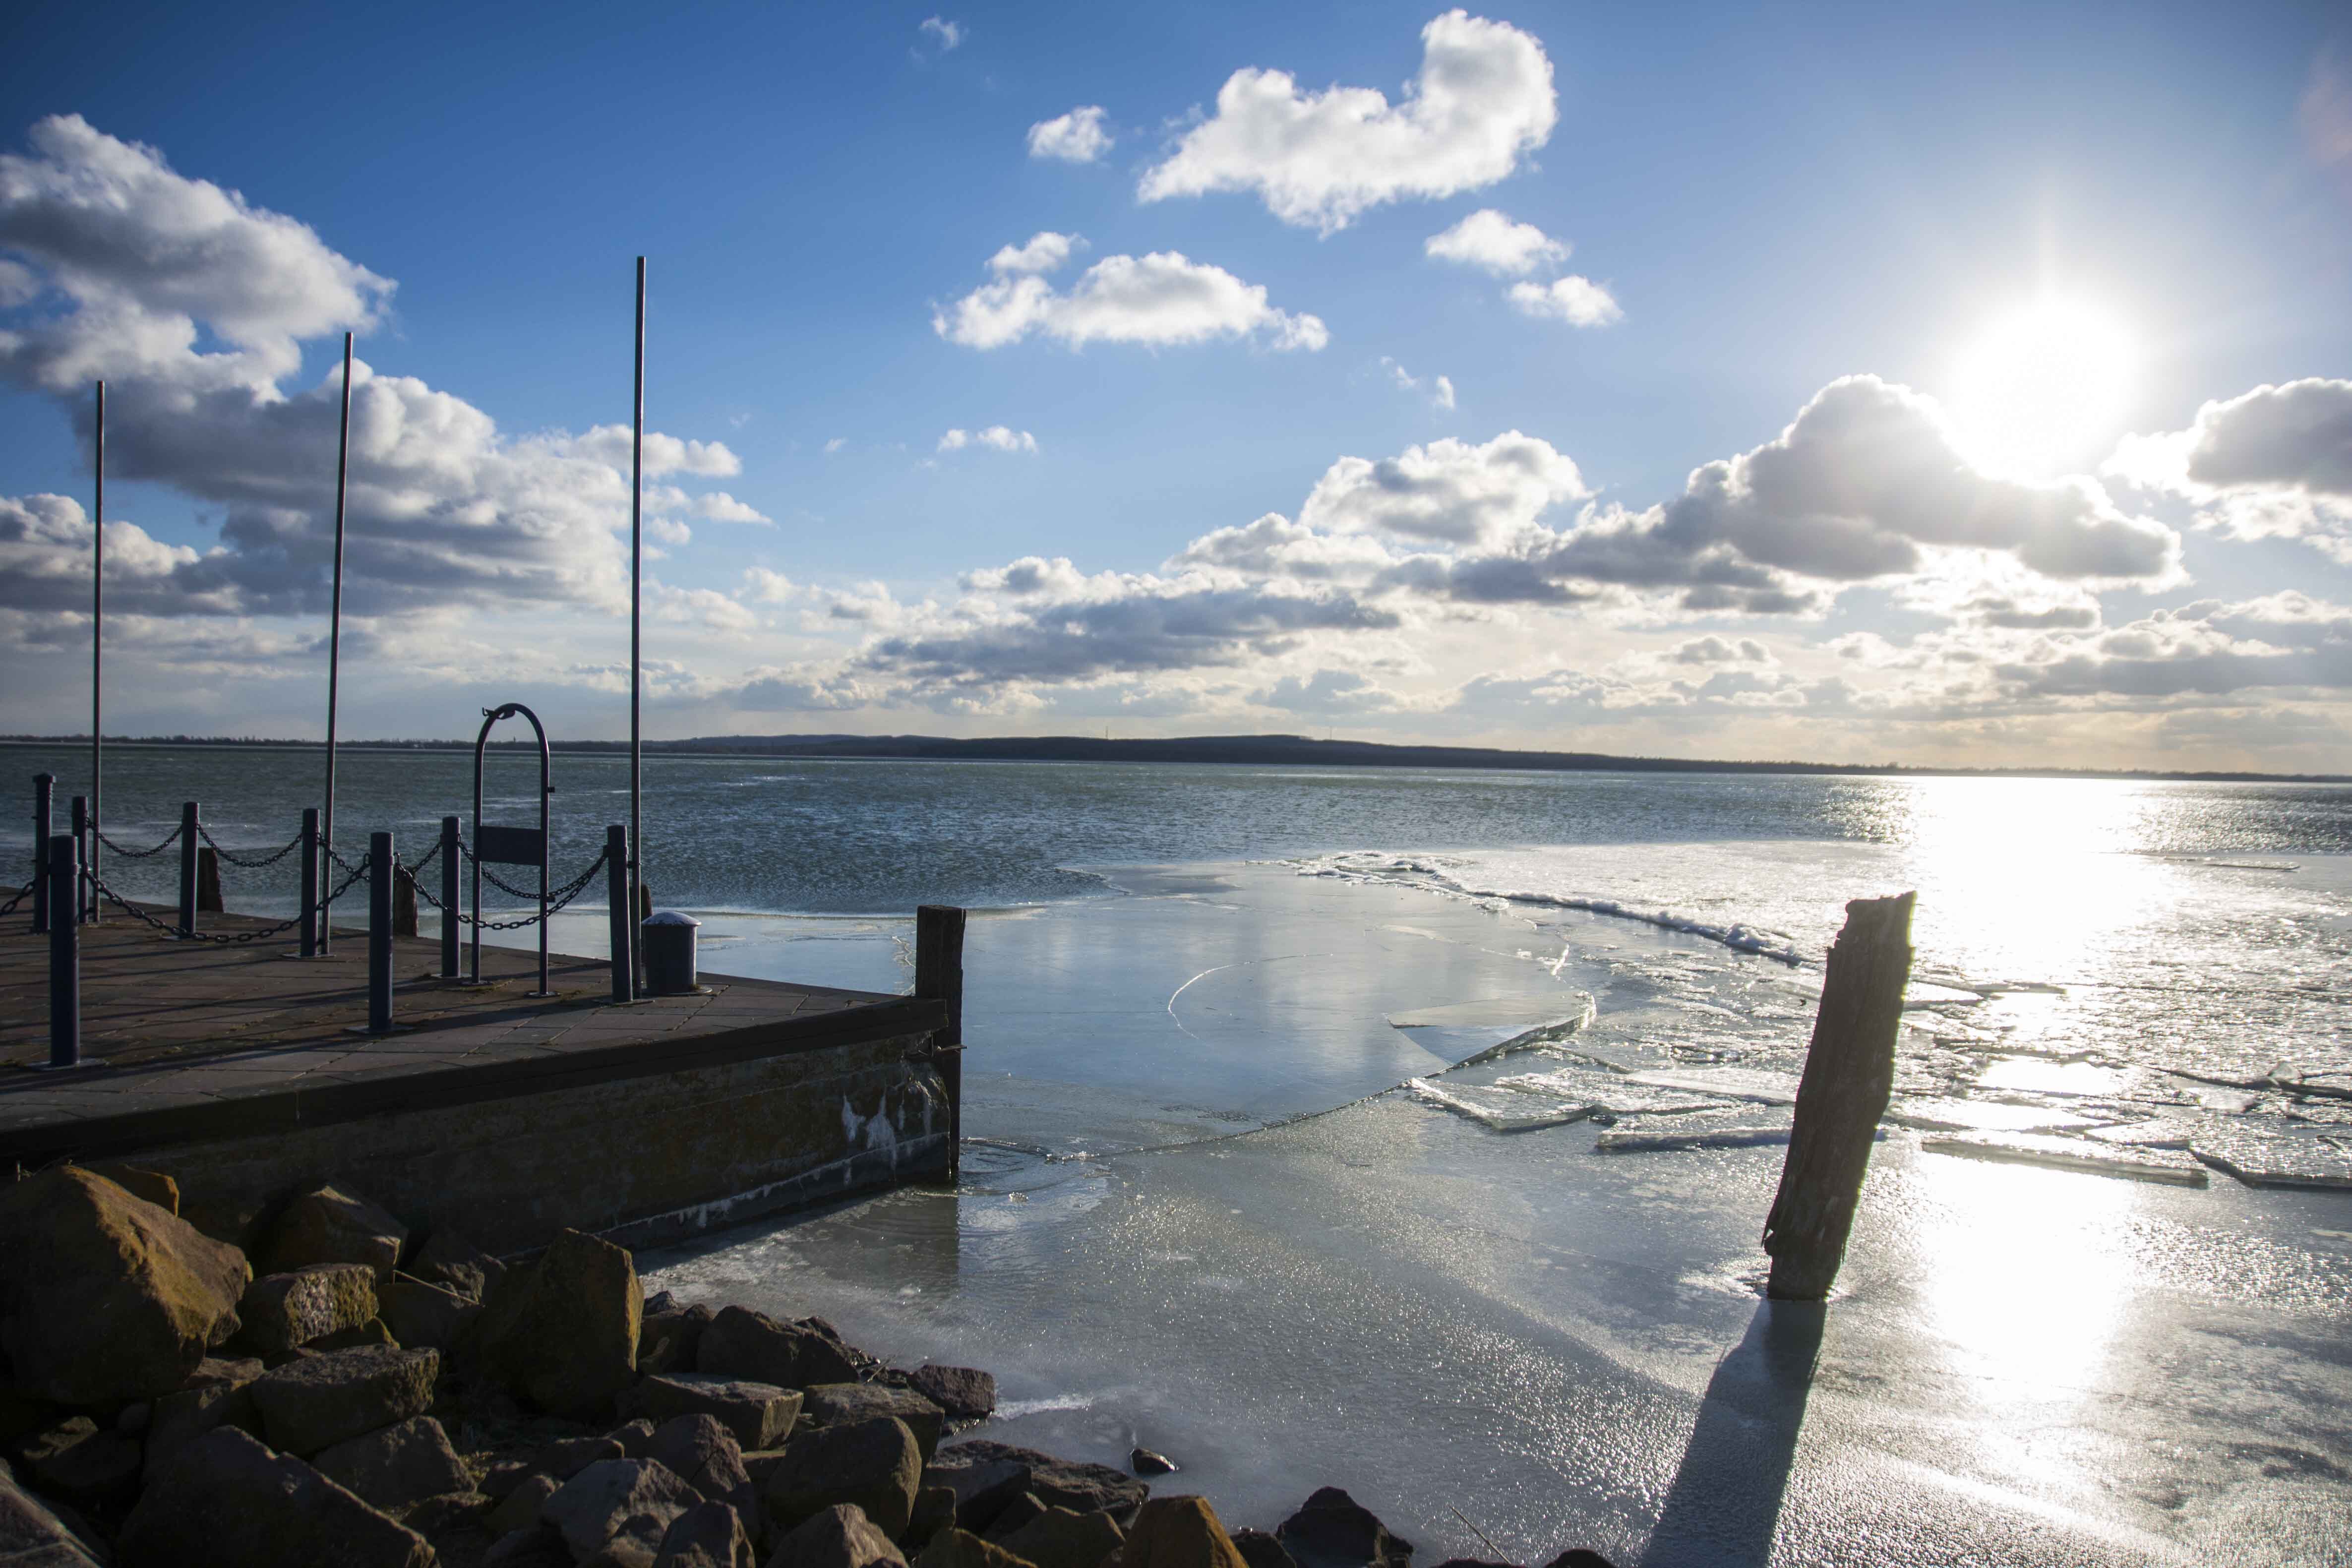 20 things to do around Lake Balaton this winter